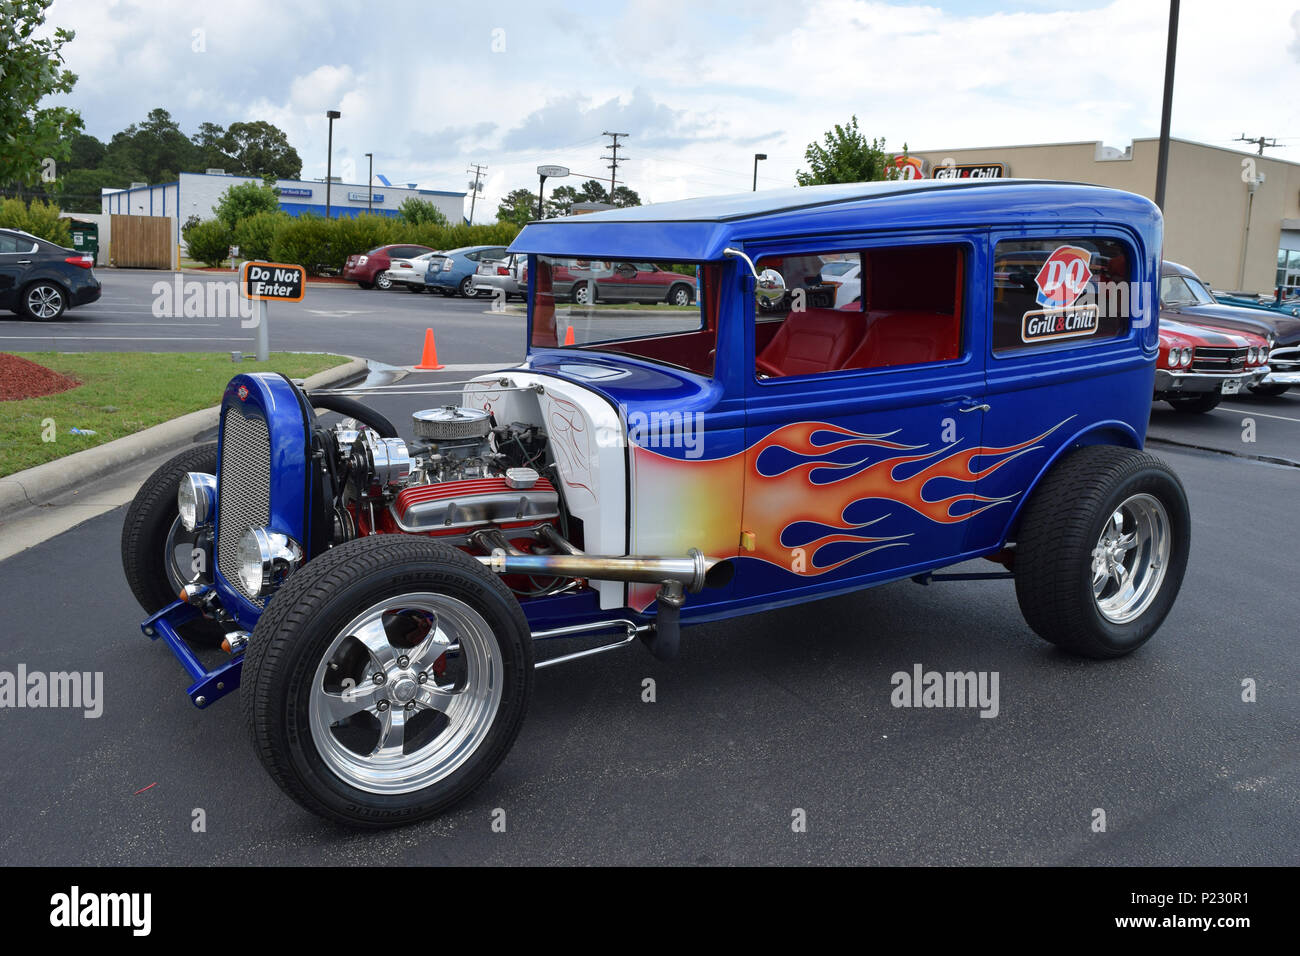 A custom Hot Rod car at a Car Show. Stock Photo